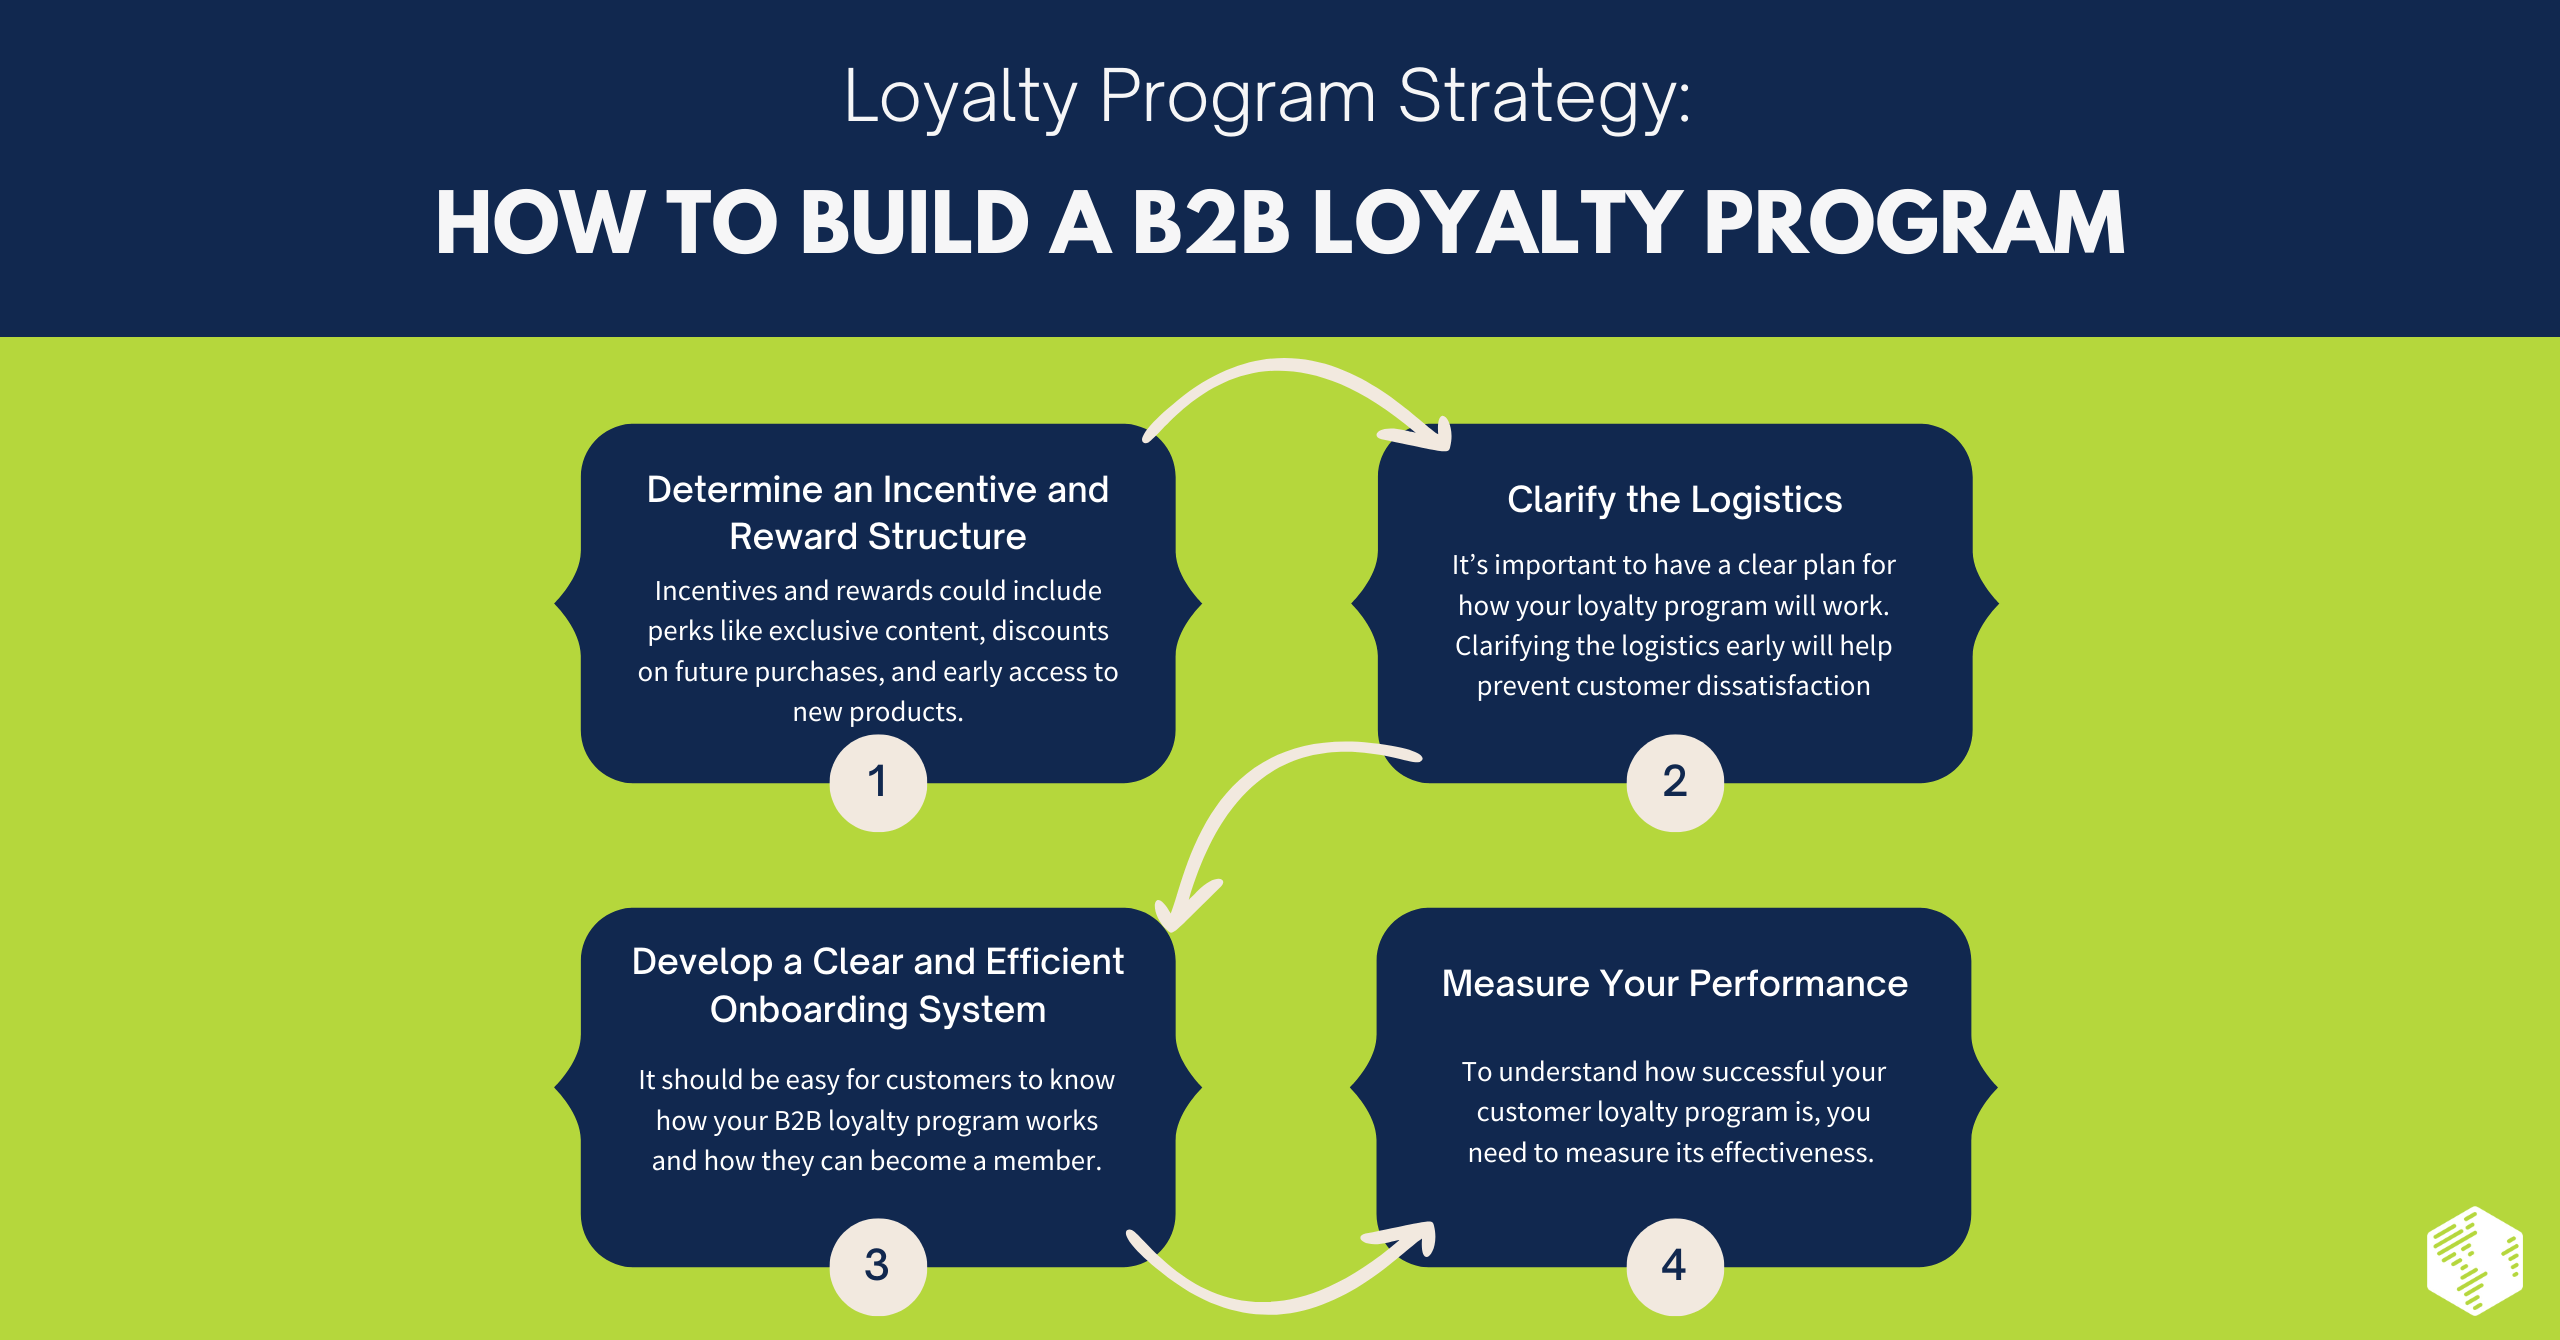 Loyalty Program Strategy for B2B